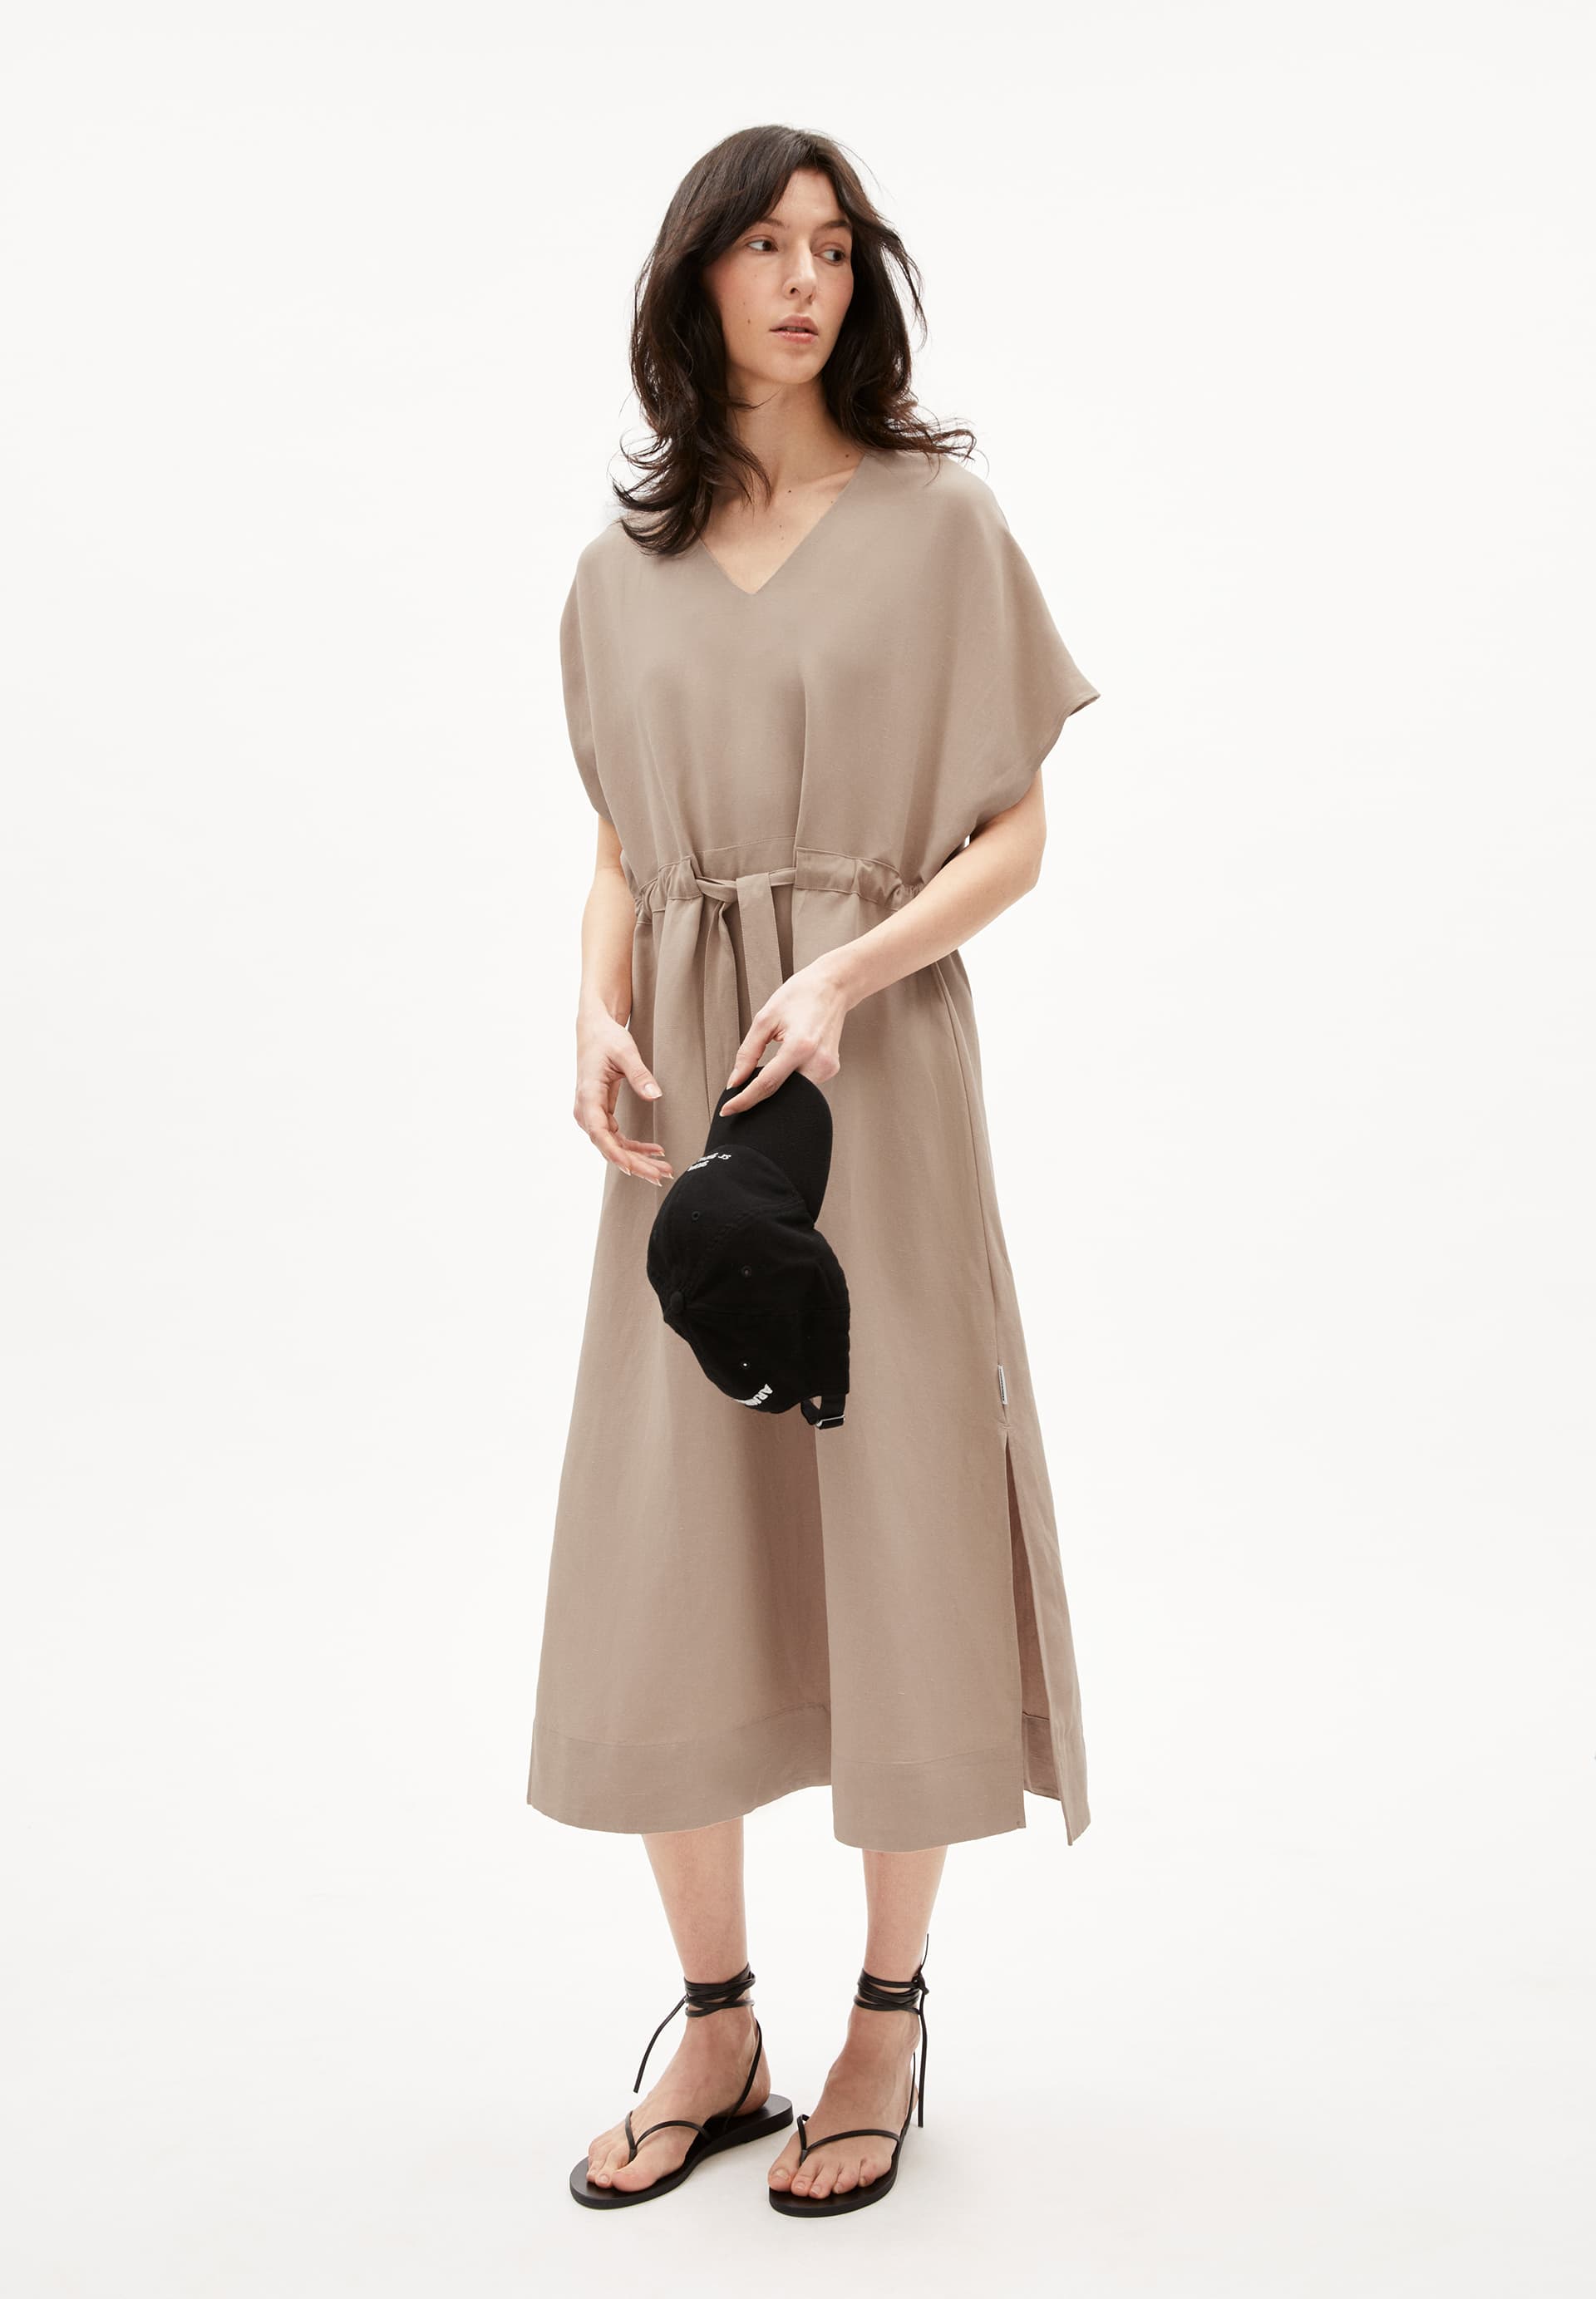 MAAHALIANA LINO Woven Dress Relaxed Fit made of Linen-Mix